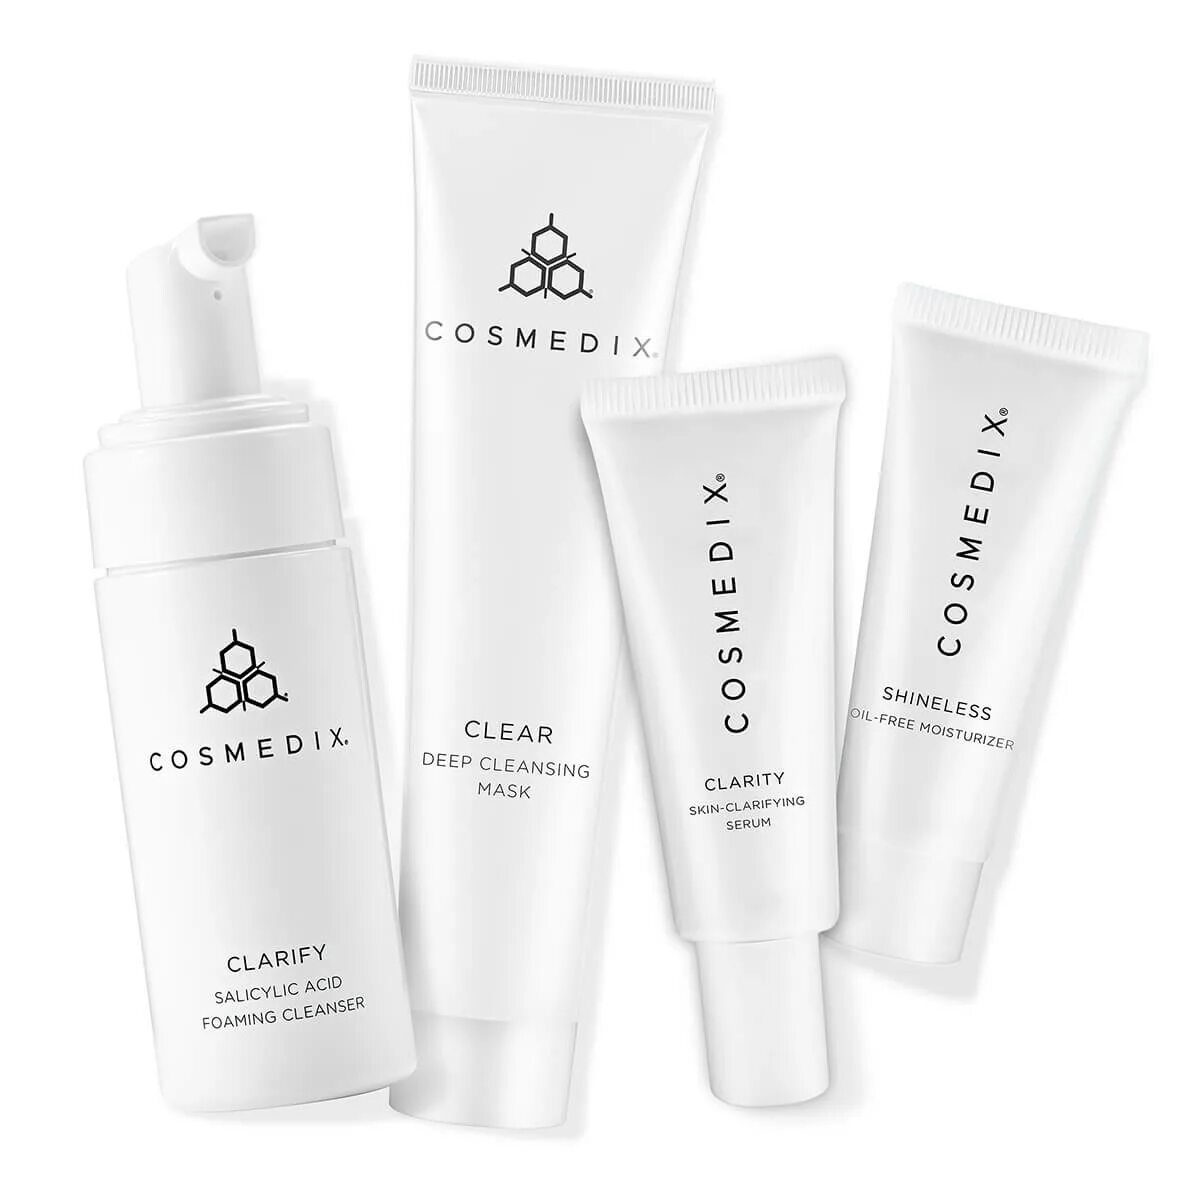 COSMEDIX combination Skin Kit. COSMEDIX clarify Salicylic acid Foaming Cleanser, 60ml. COSMEDIX shineless. Clarity COSMEDIX.